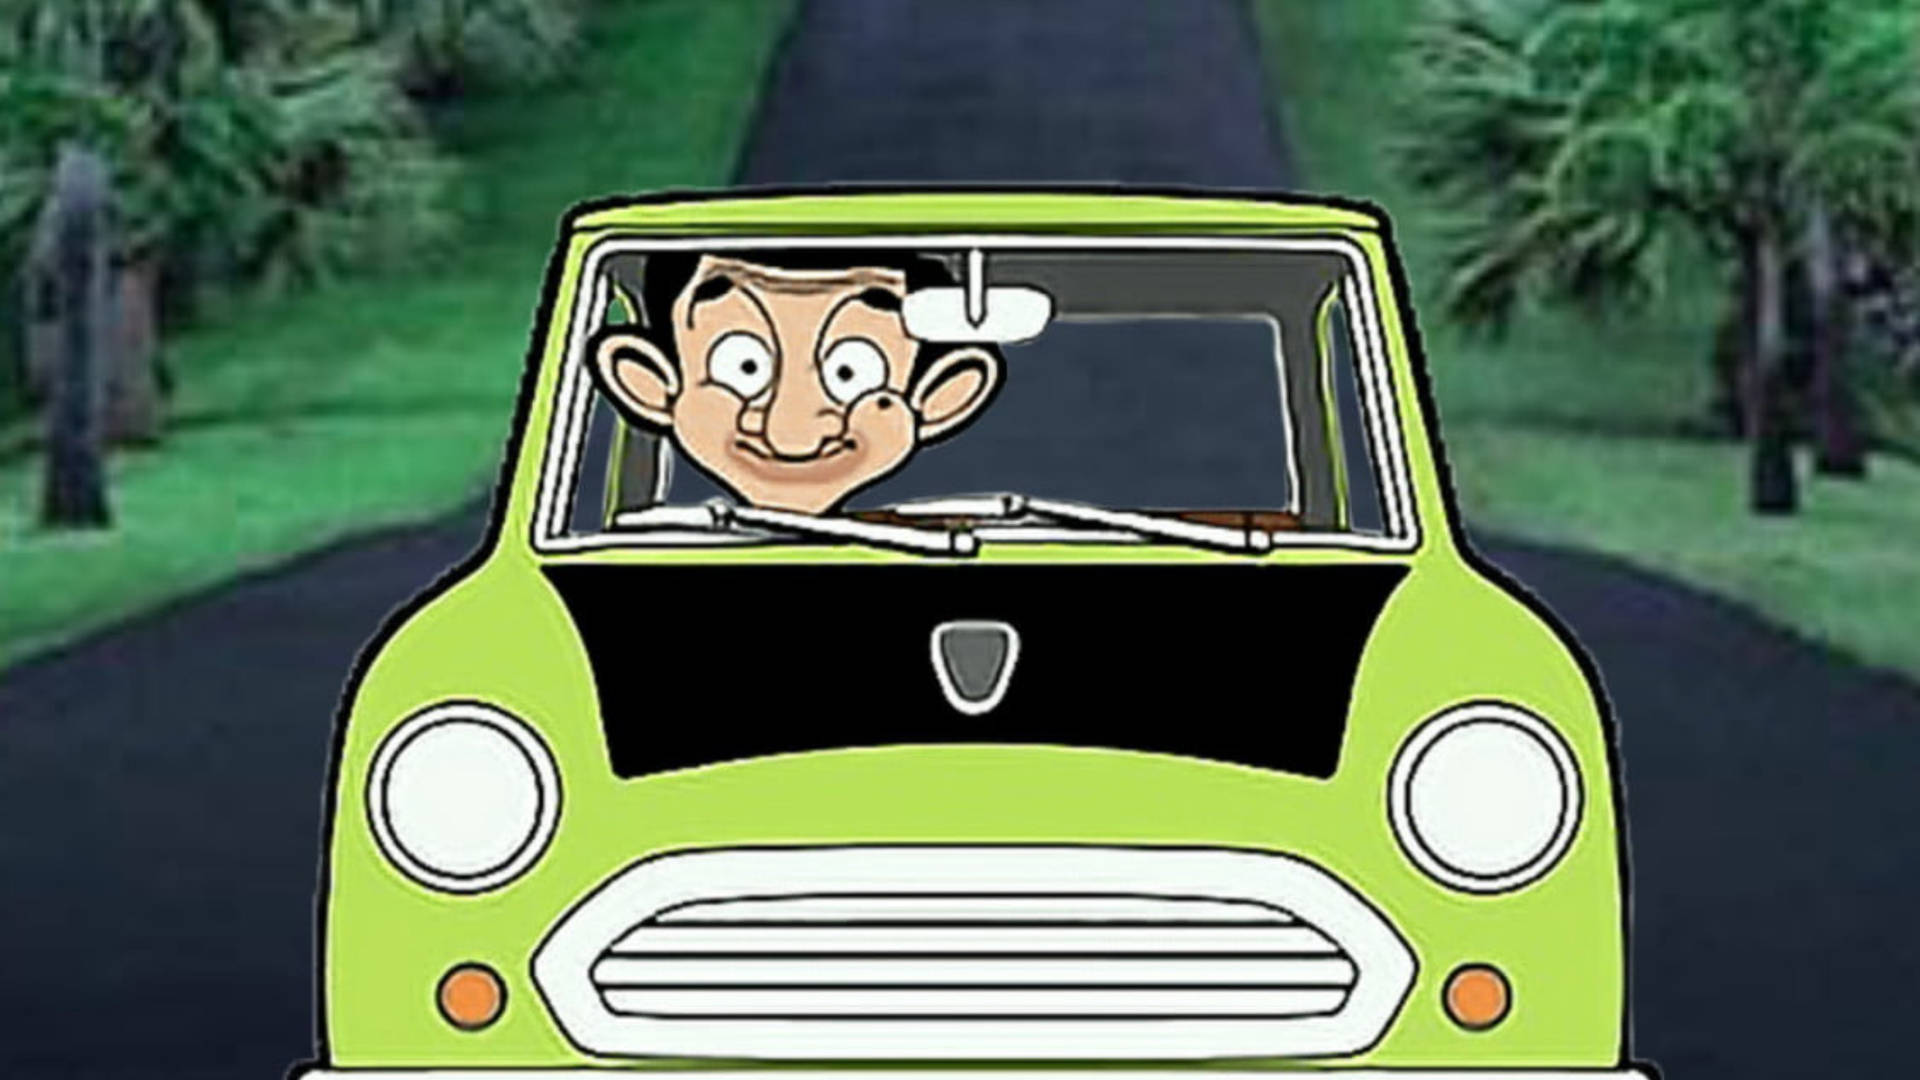 Mr. Bean Cartoon Riding Car Background